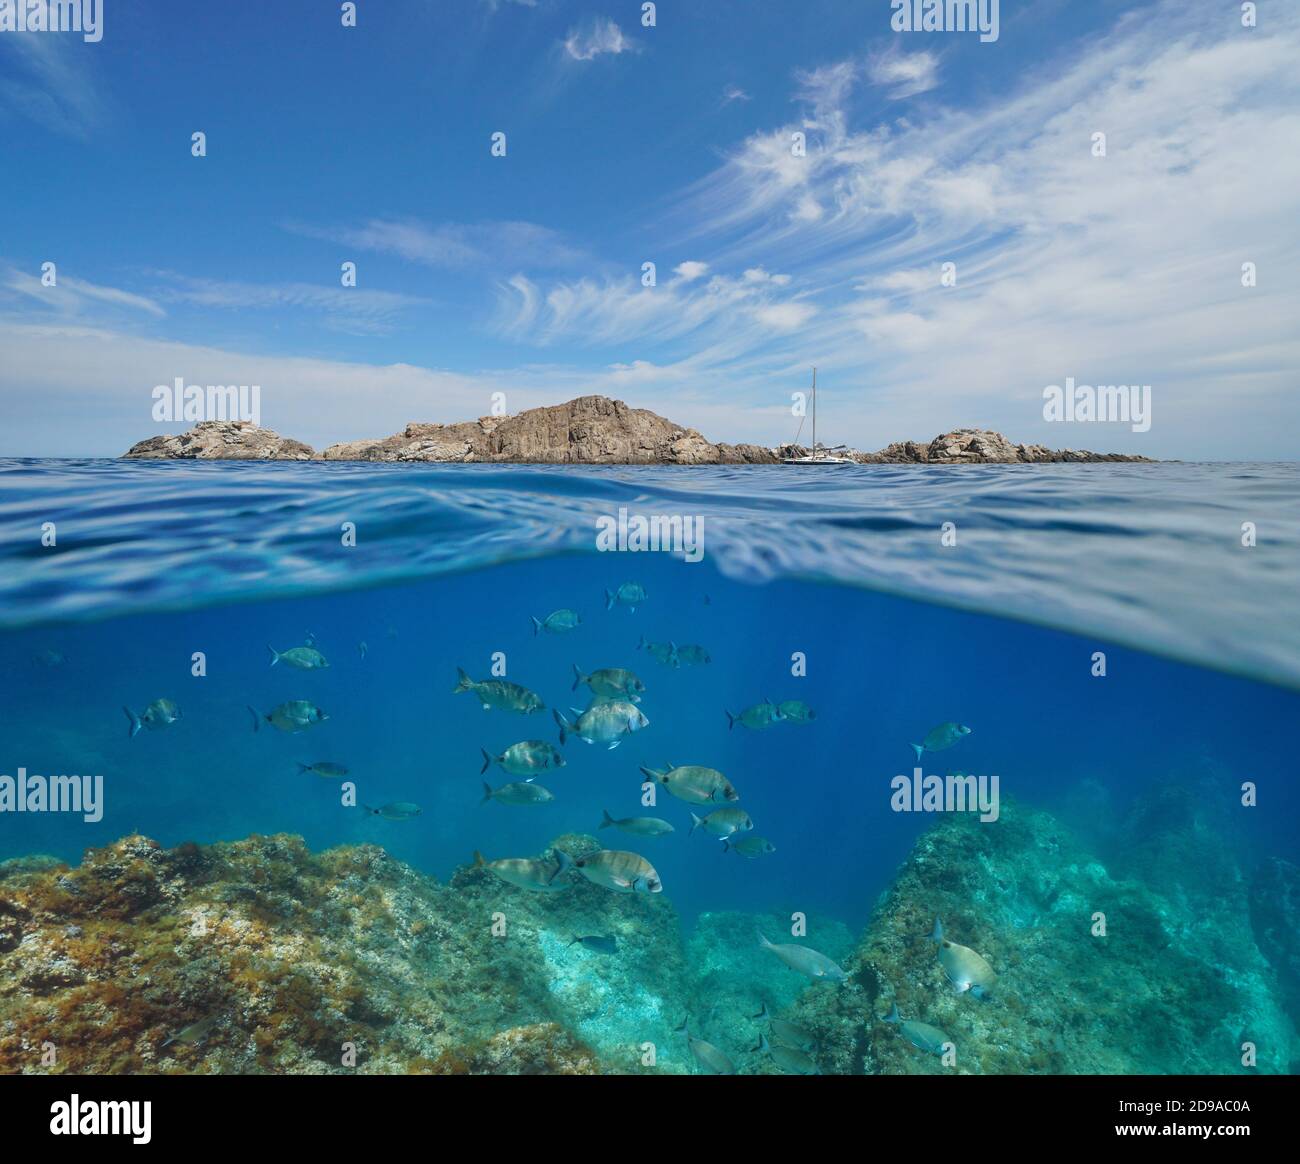 Seascape of Mediterranean sea, rocky island and a group of fish underwater, Cap de Creus, Costa Brava, Catalonia, Spain, split view over under water Stock Photo